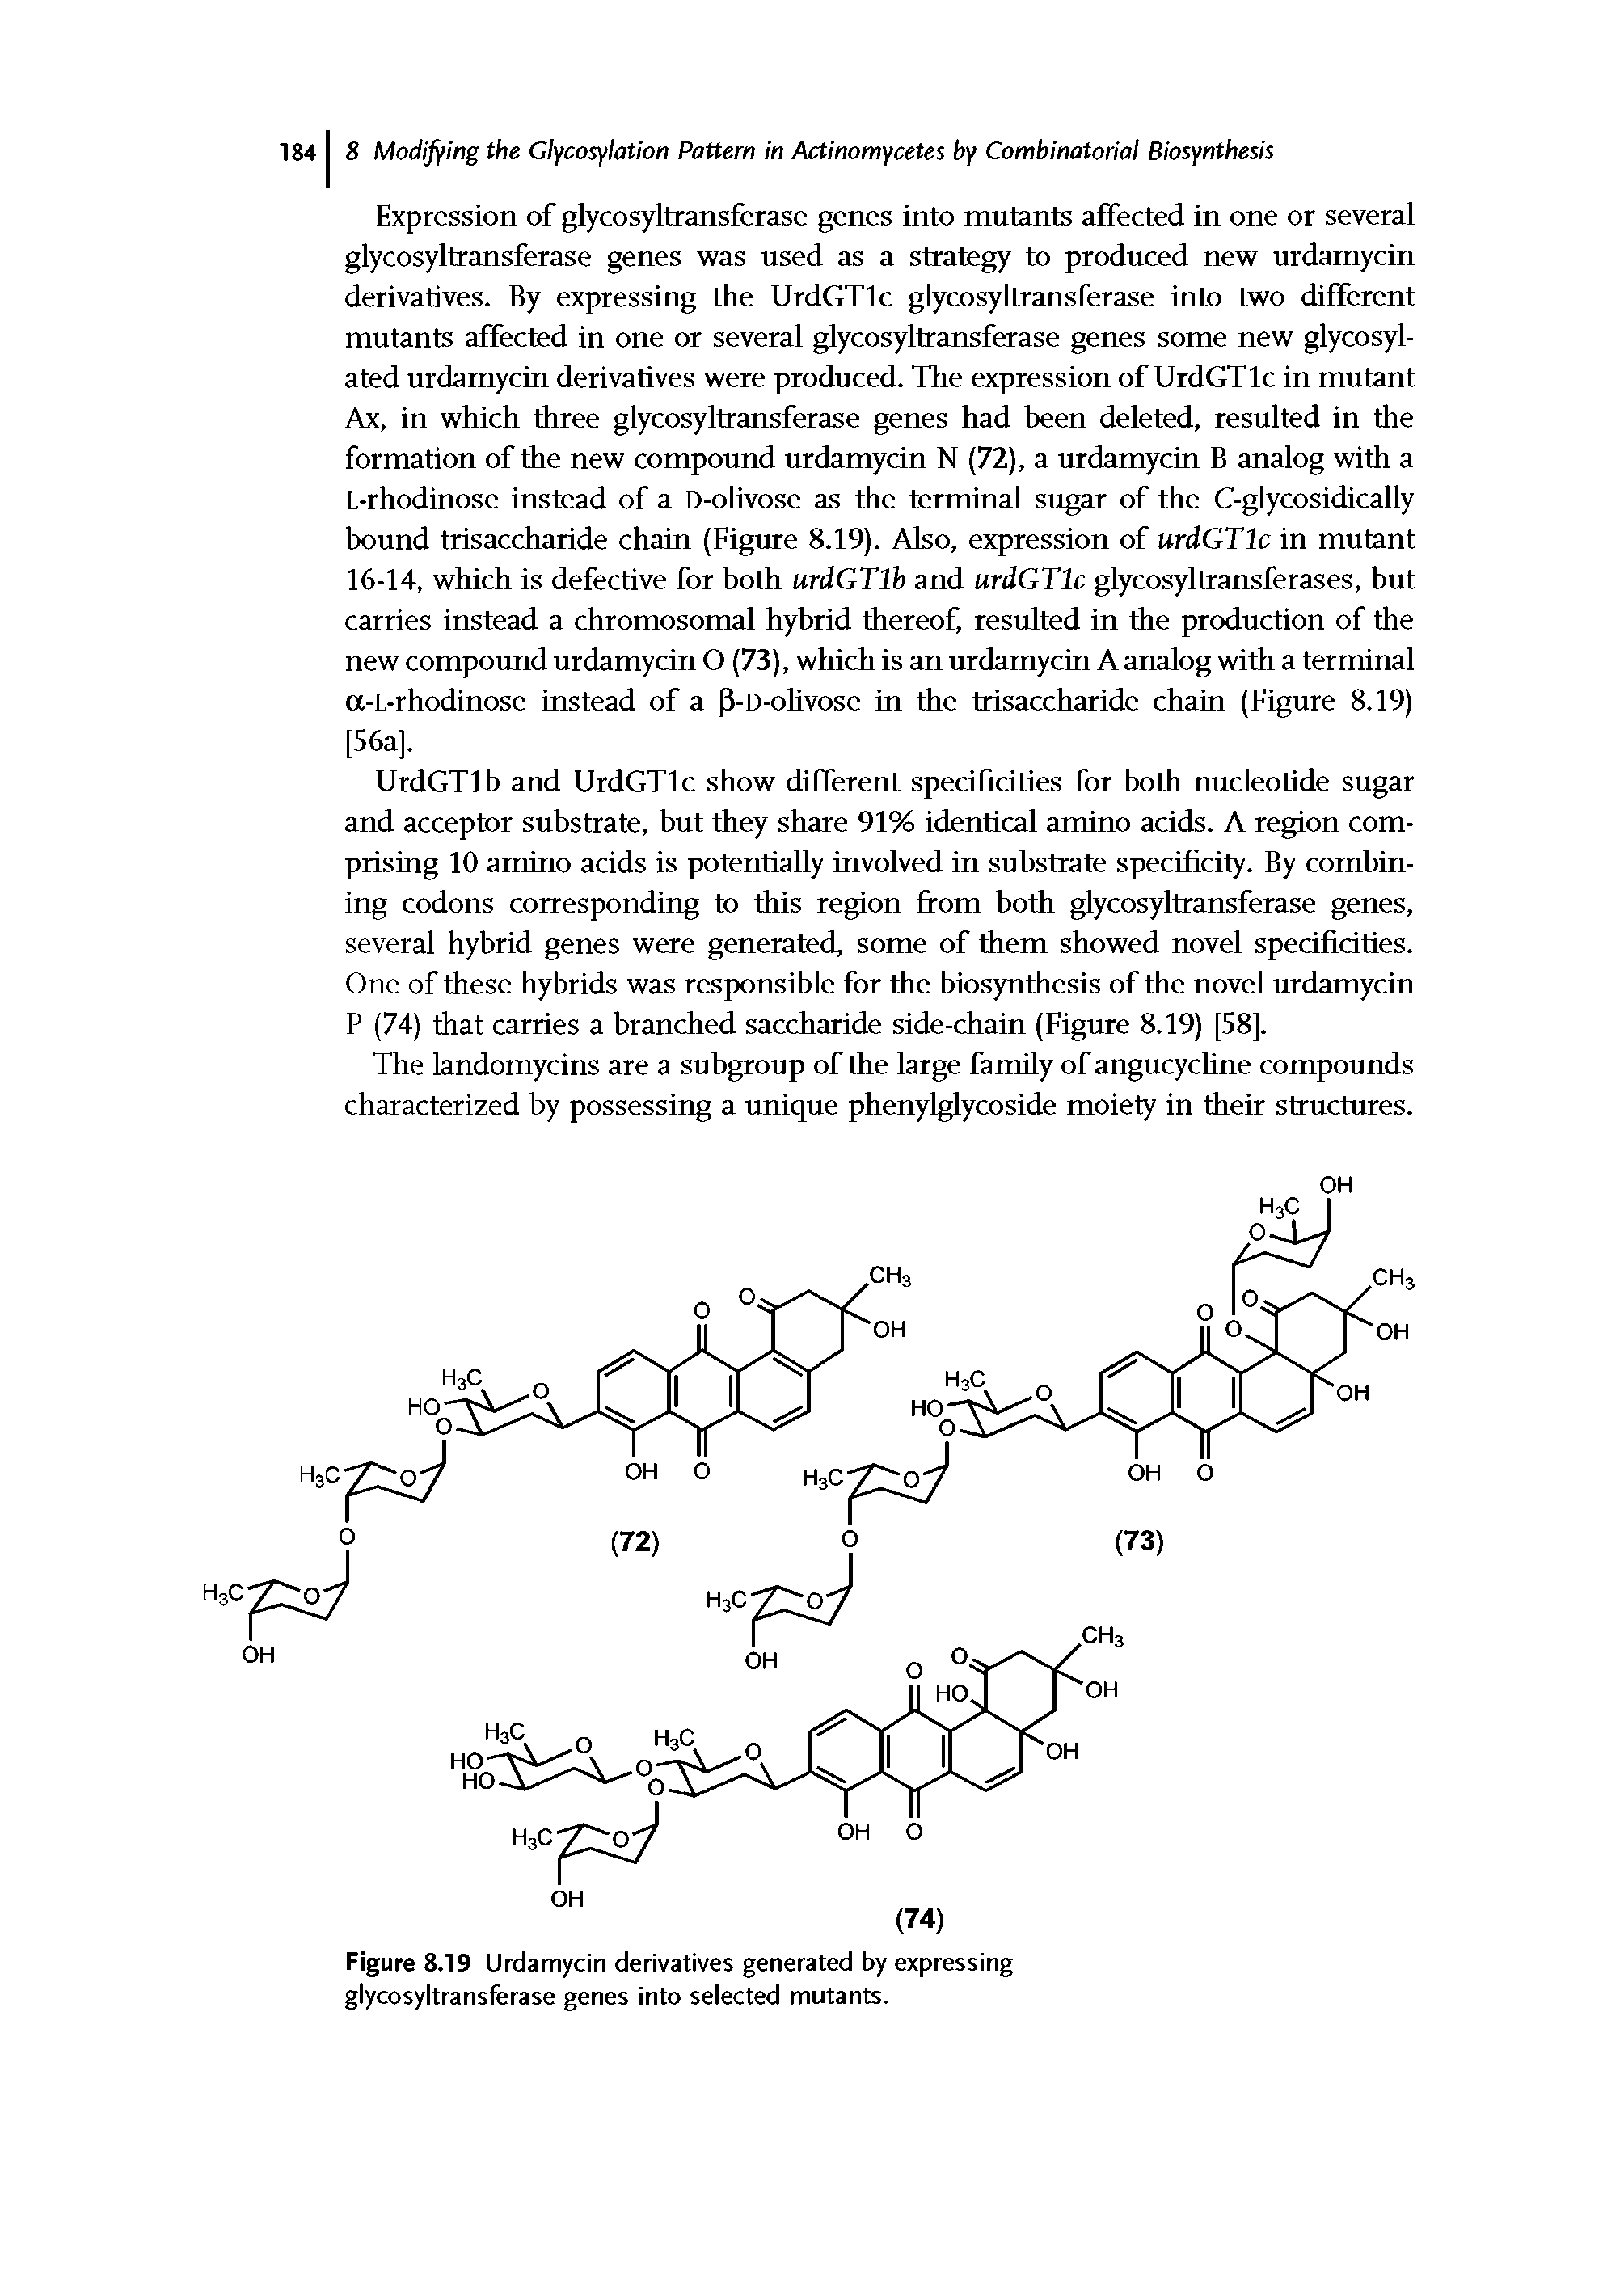 Figure 8.19 Urdamycin derivatives generated by expressing glycosyltransferase genes into selected mutants.